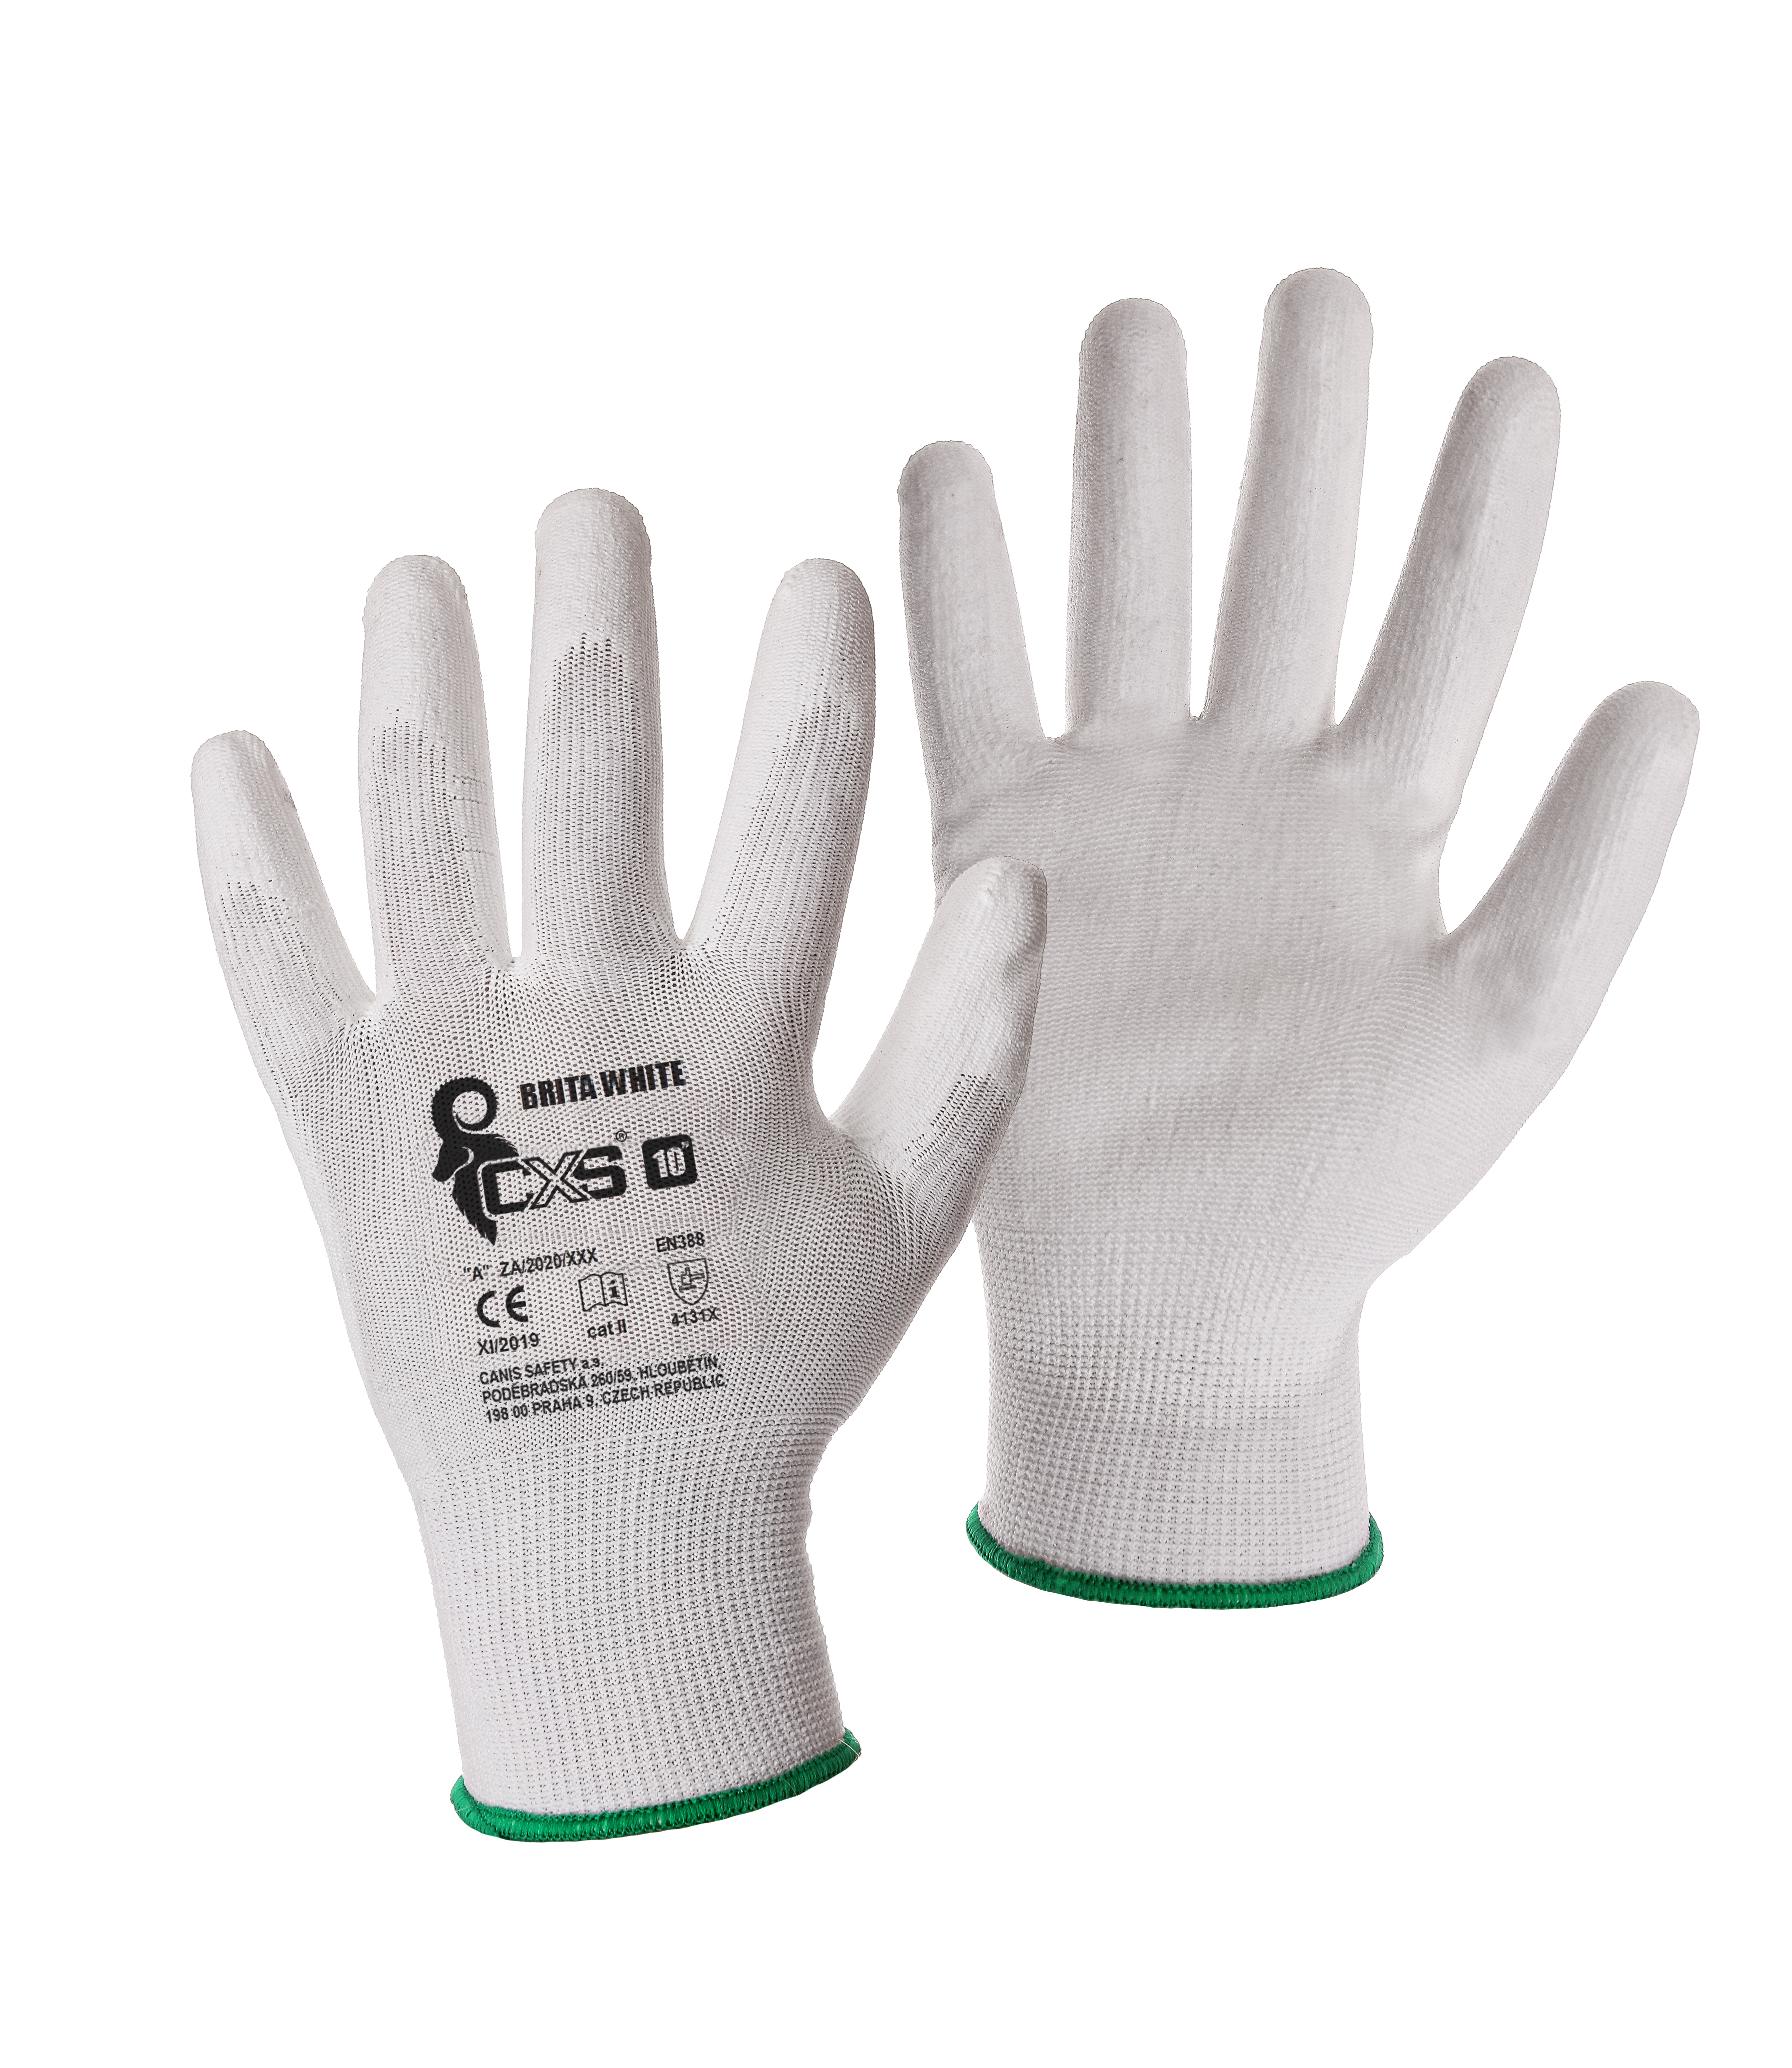 rukavice BRITA WHITE, s PU dlaní a úpletem, velikost 10 0.02 Kg TOP Sklad4 600147 781